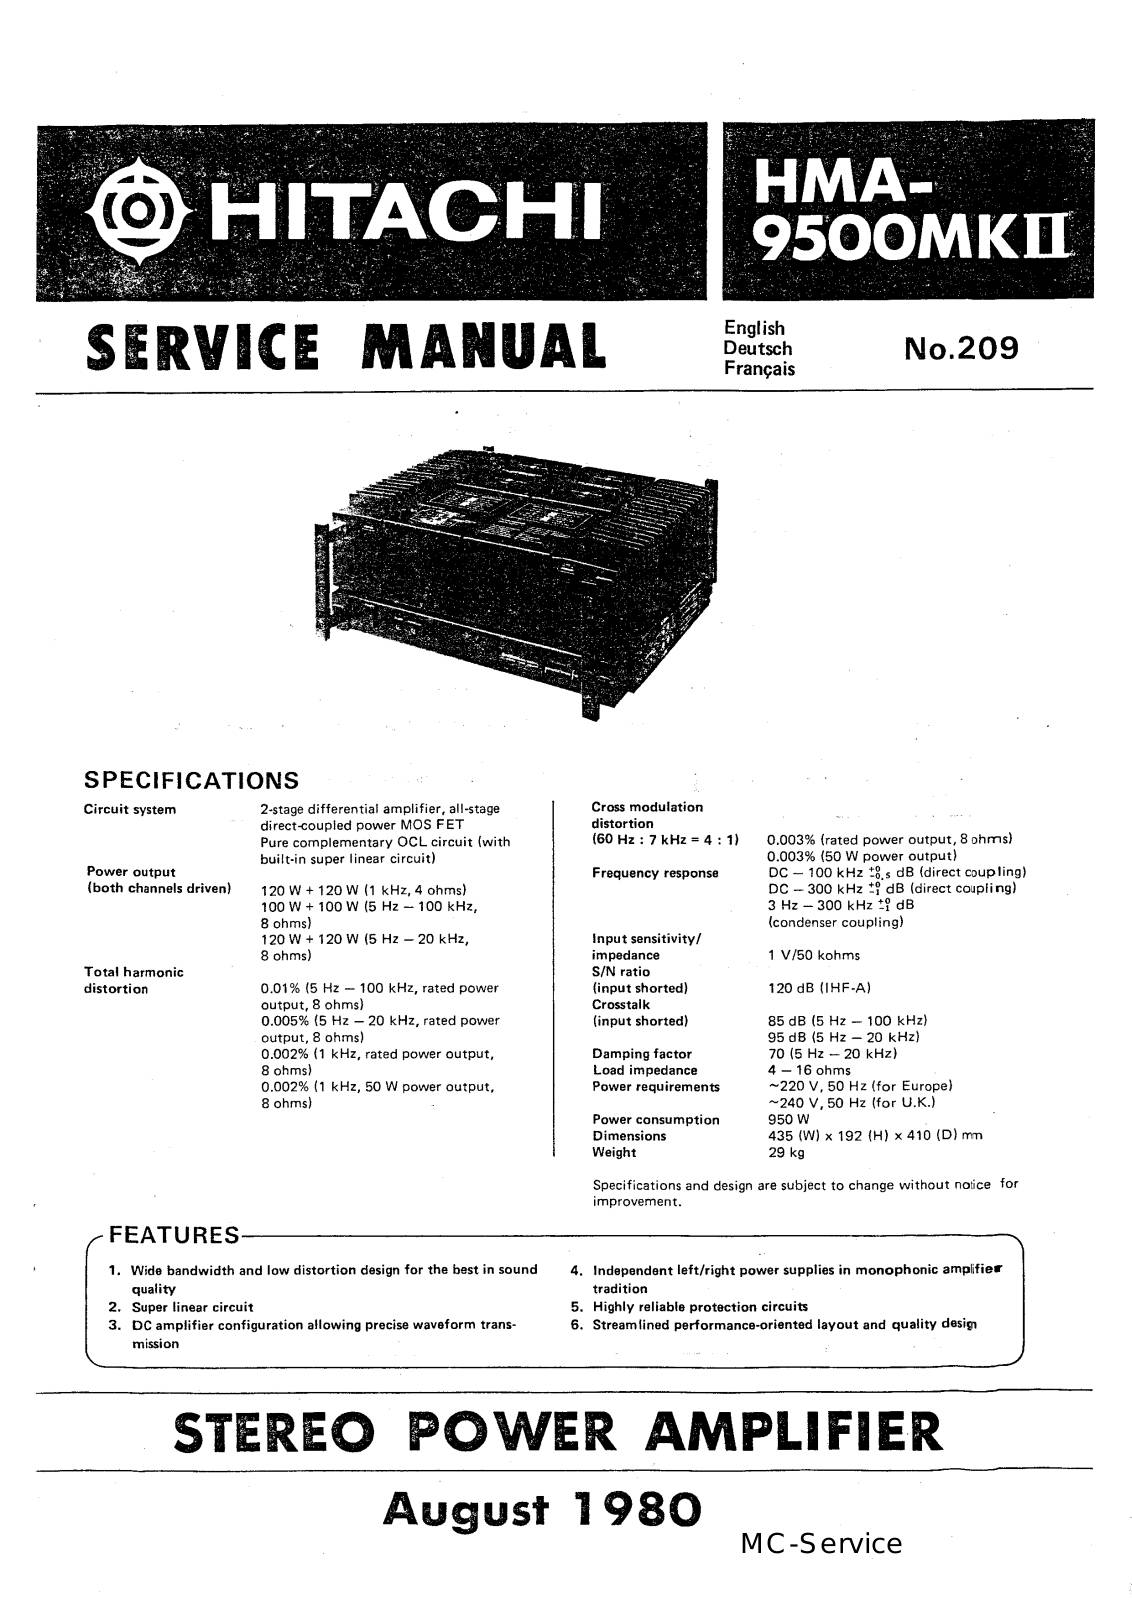 Hitachi HMA-9500 (mkII)